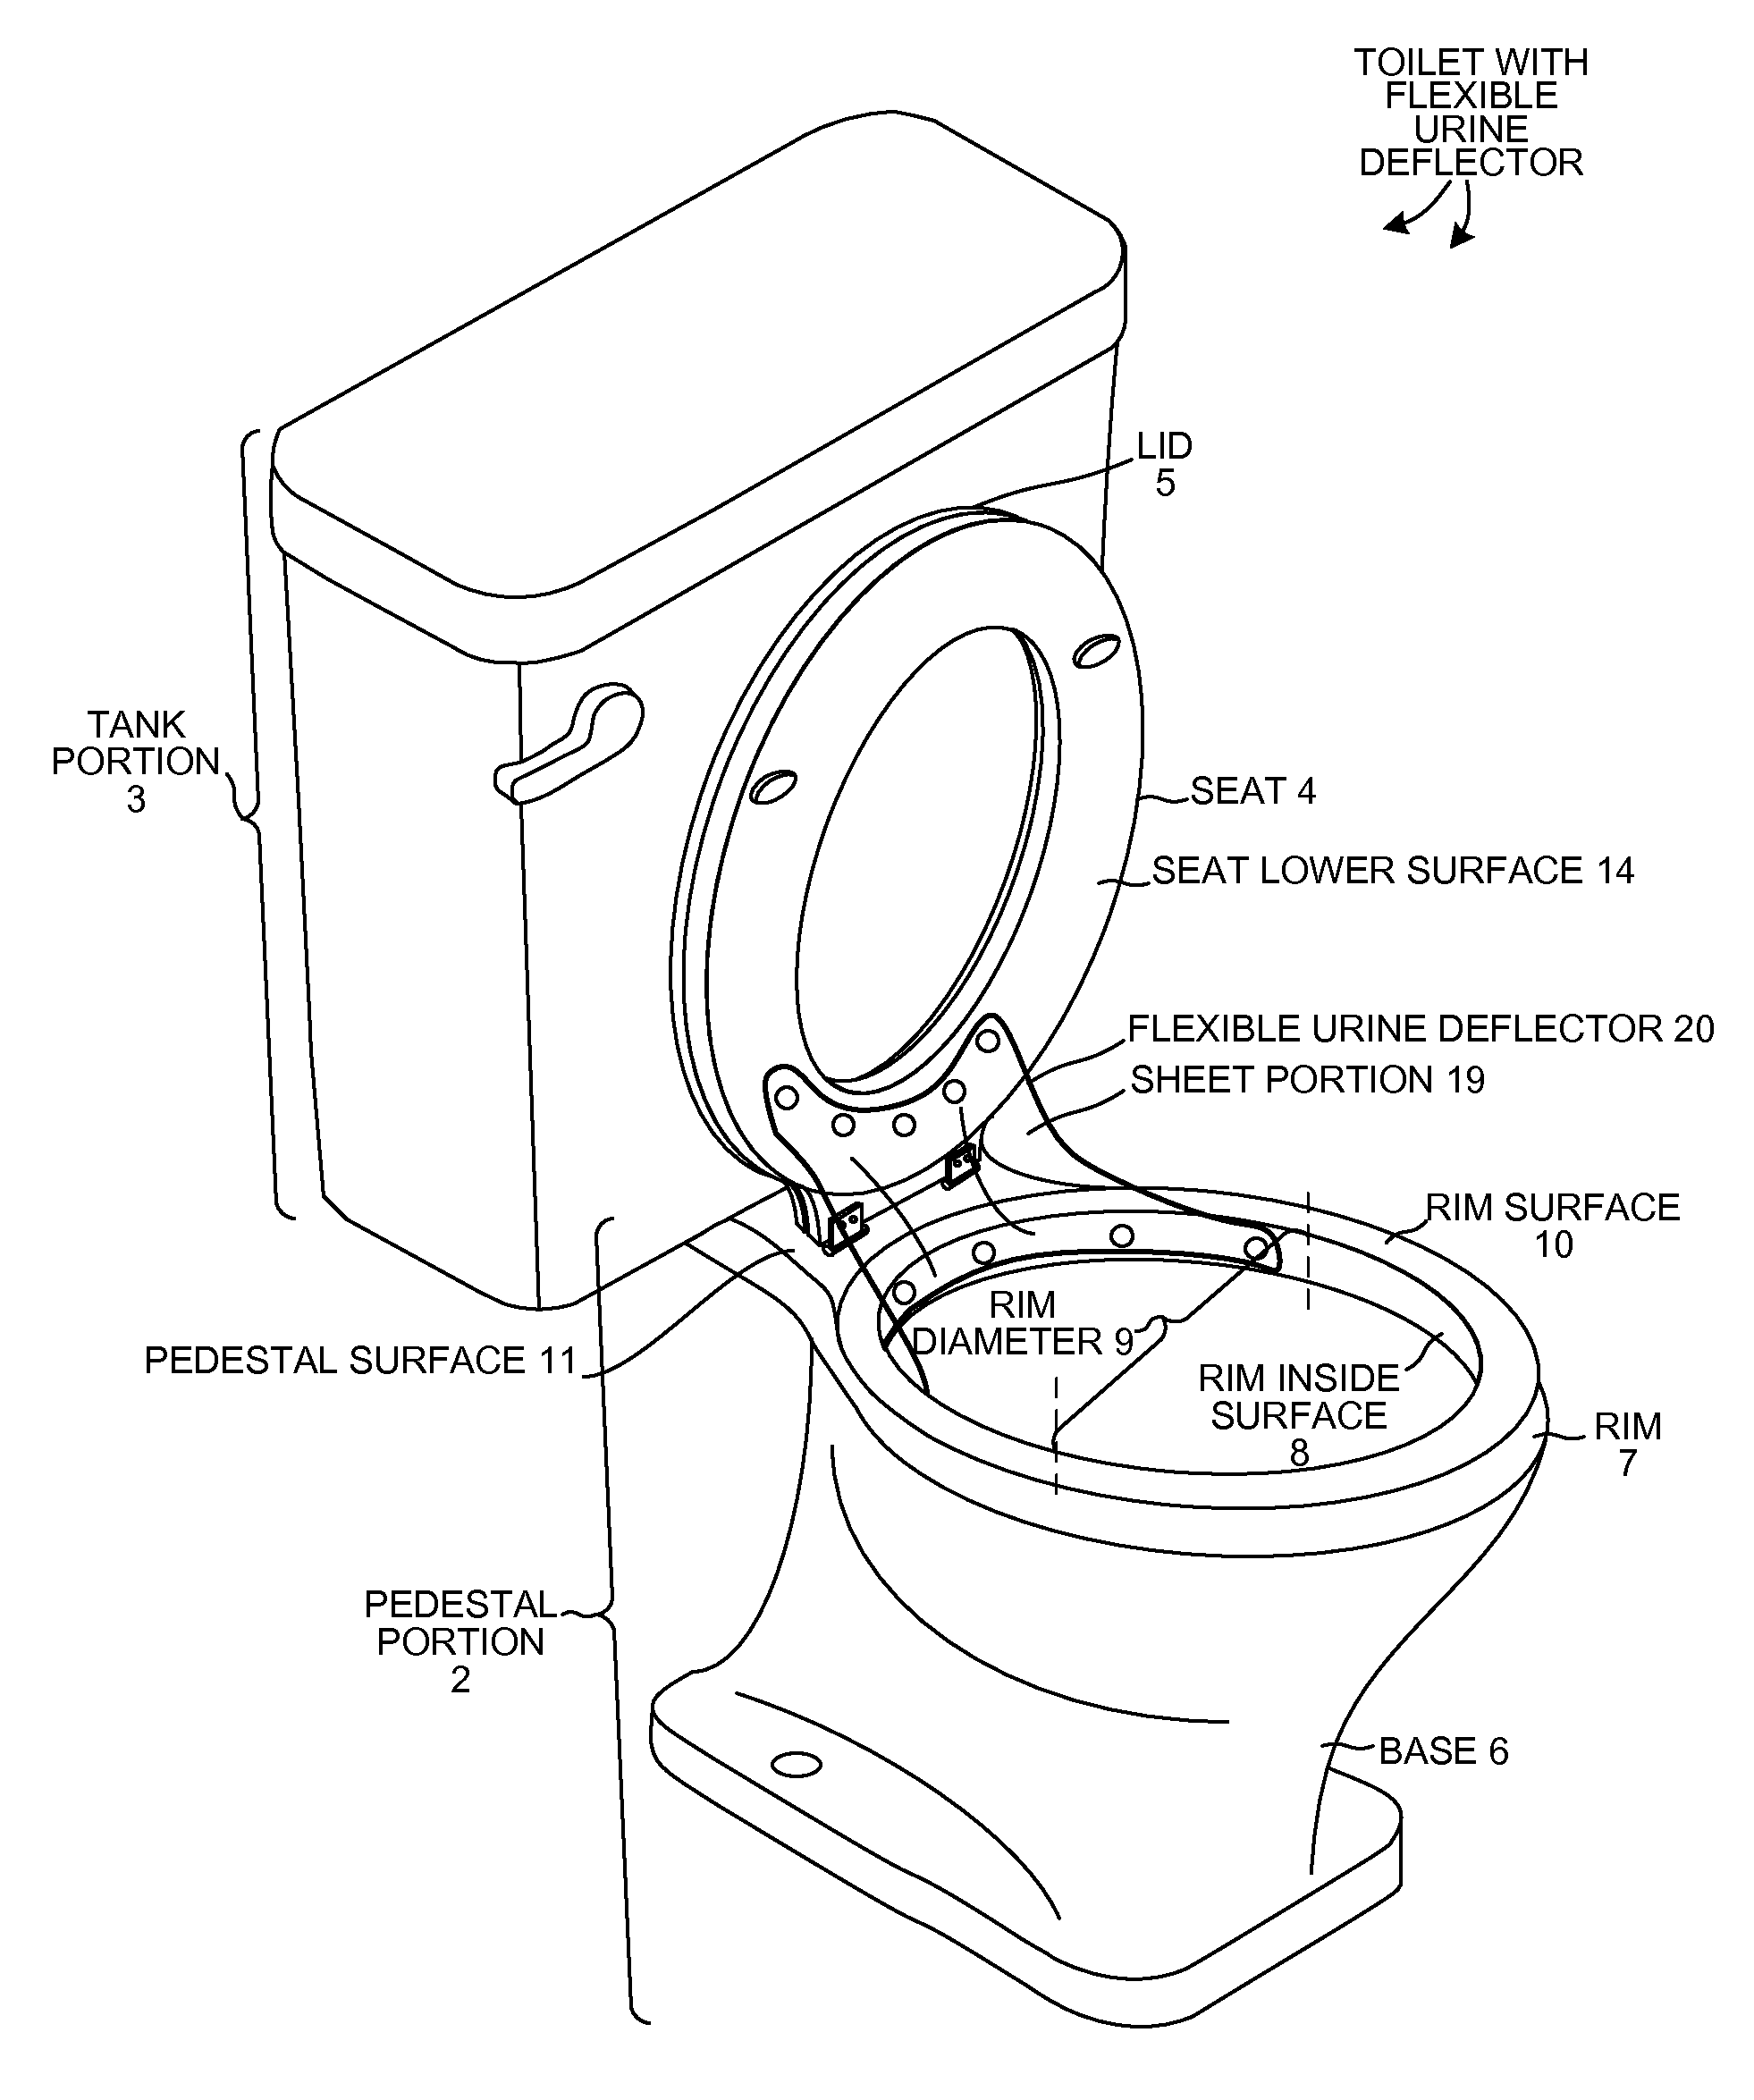 Removable, Reusable, and Flexible Urine Deflector